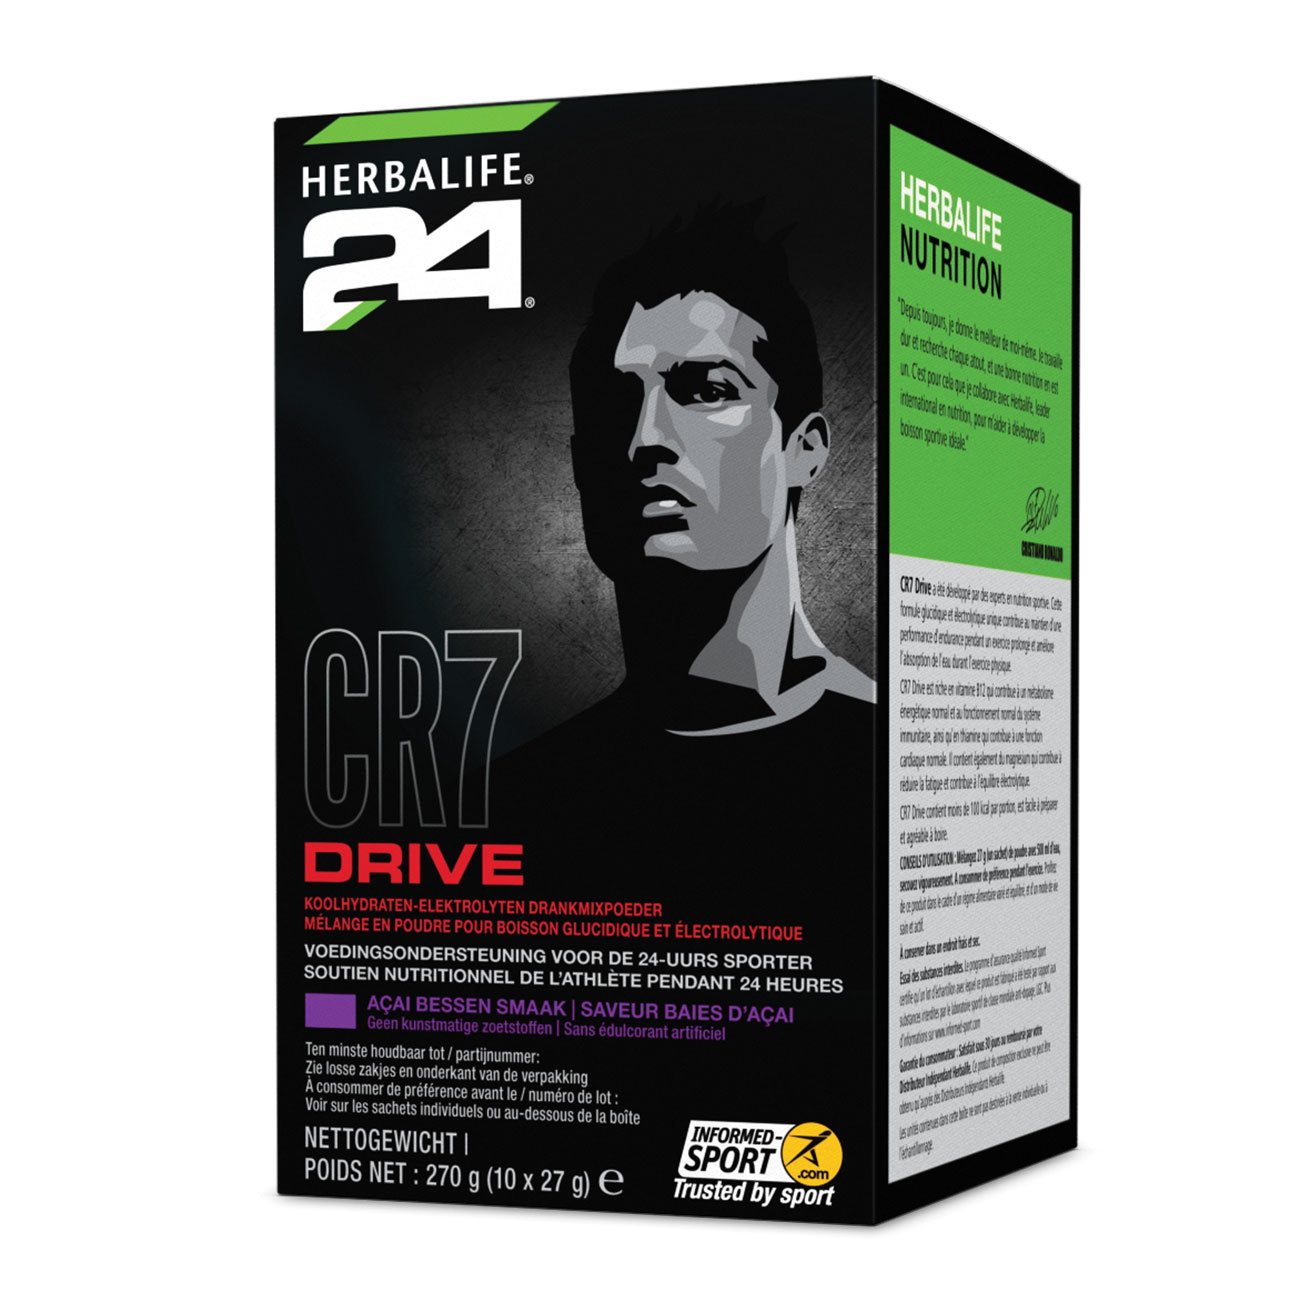 Herbalife24® CR7 Drive sportdrank açai bessen 10 zakjes van 27g product shot